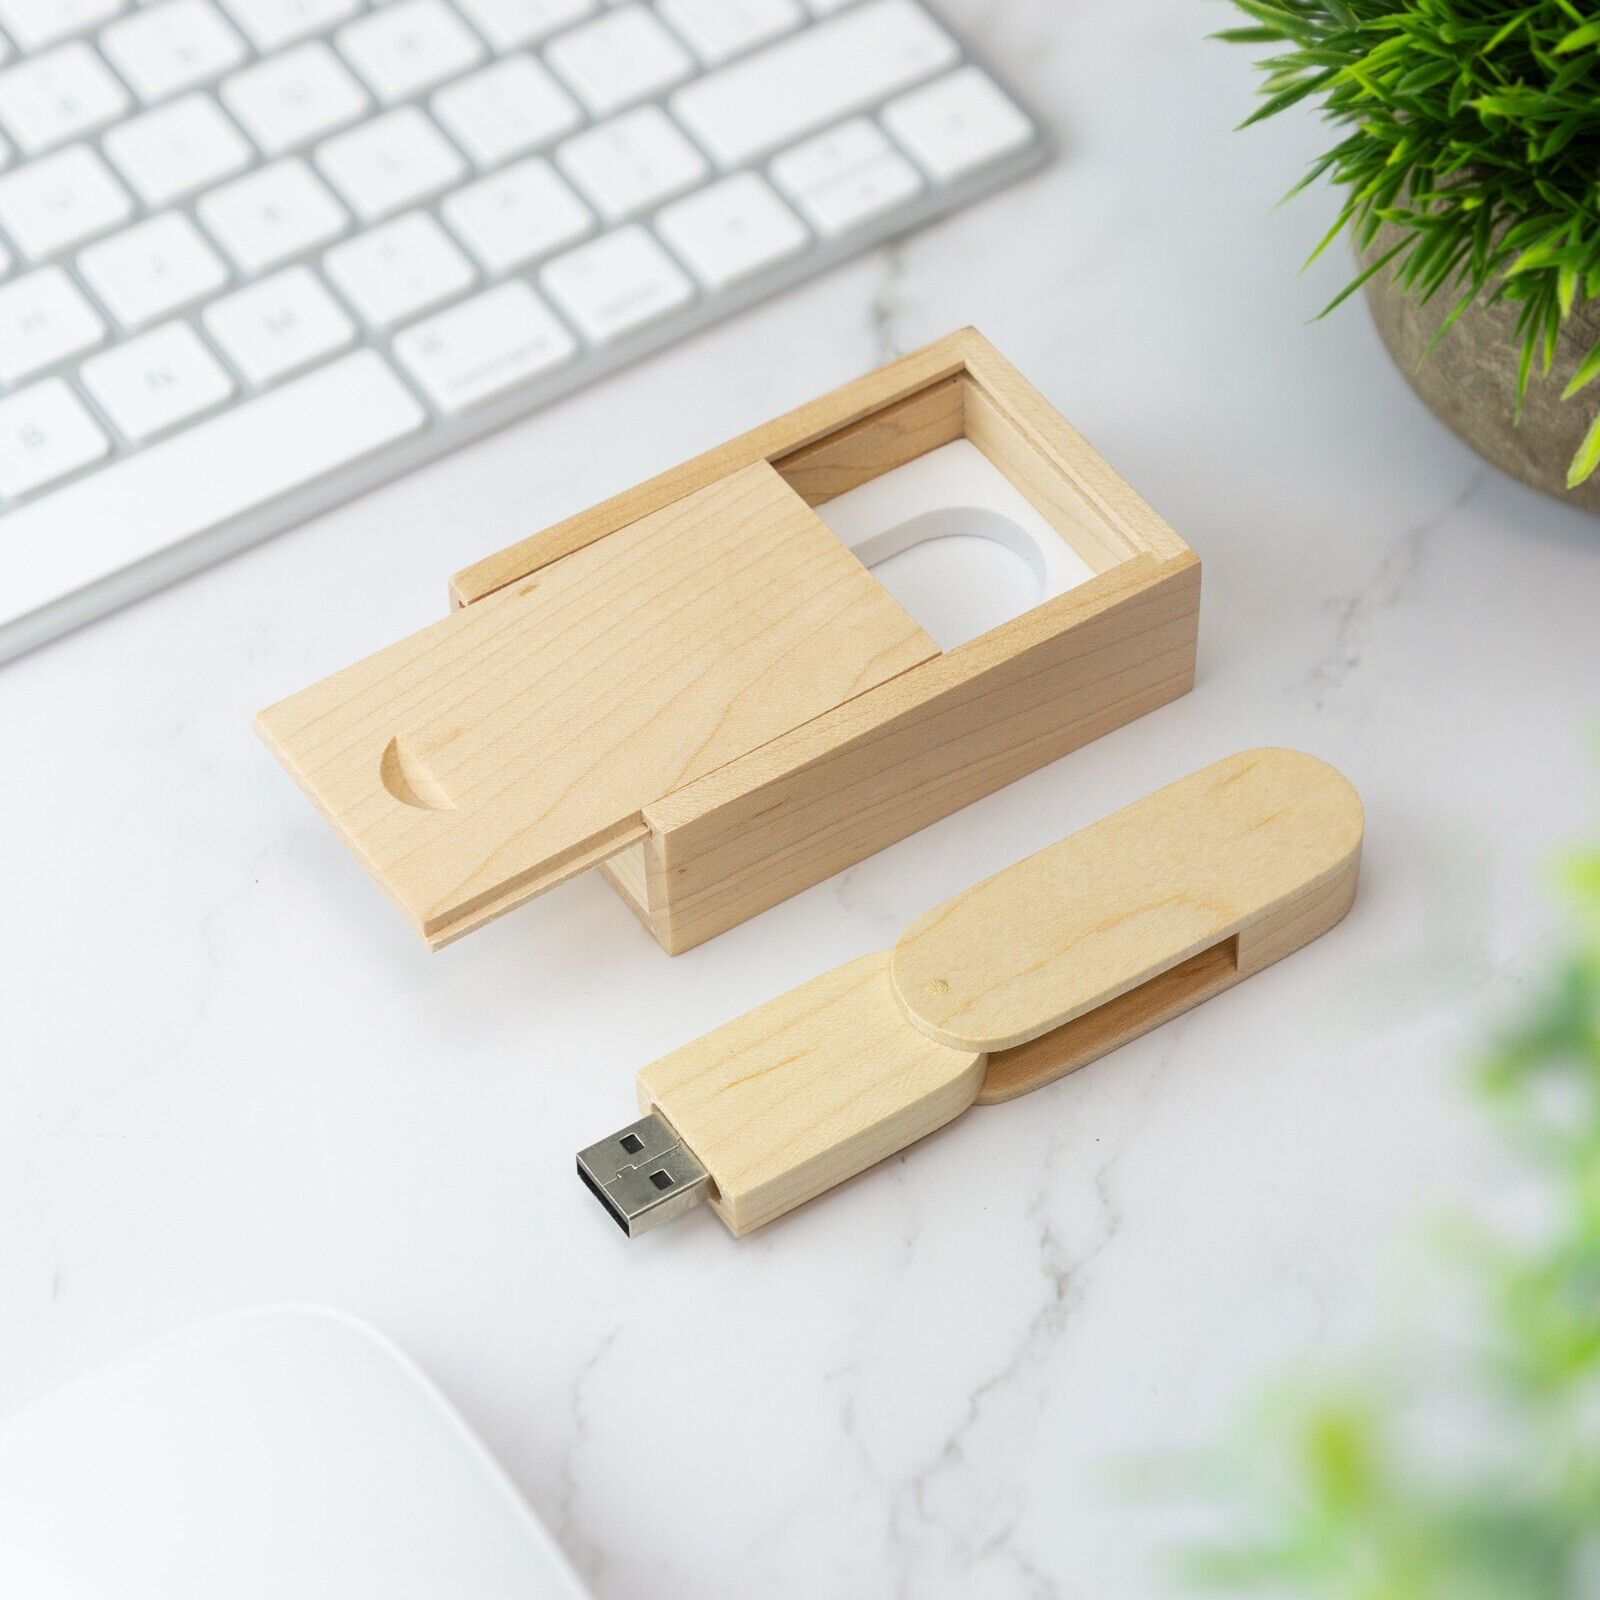 Custom Printed Wooden USB Box Flash Drive 64GB Storage Wedding Gift Favours